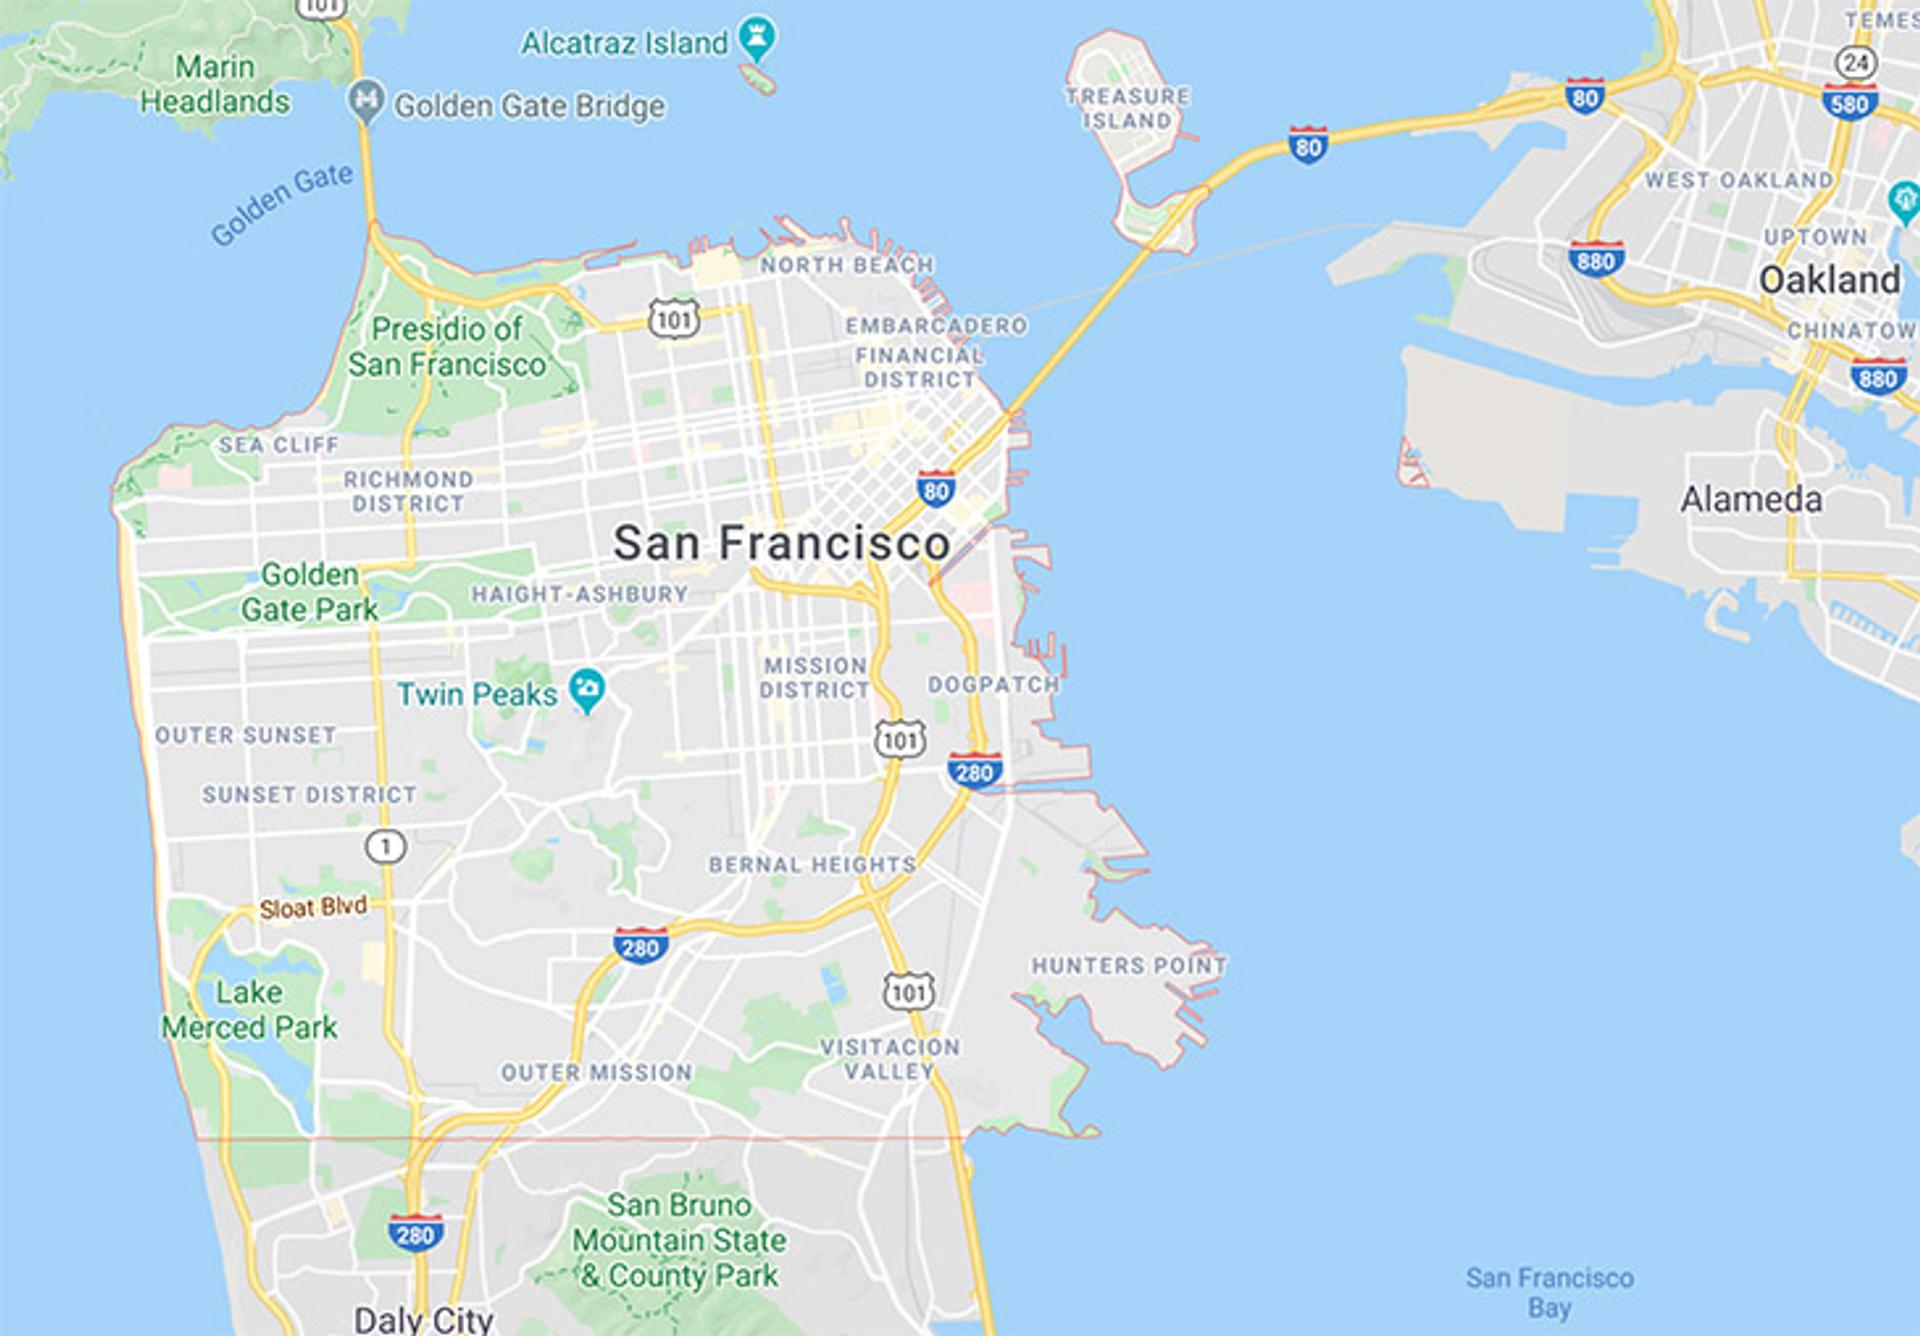 San Francisco County borders